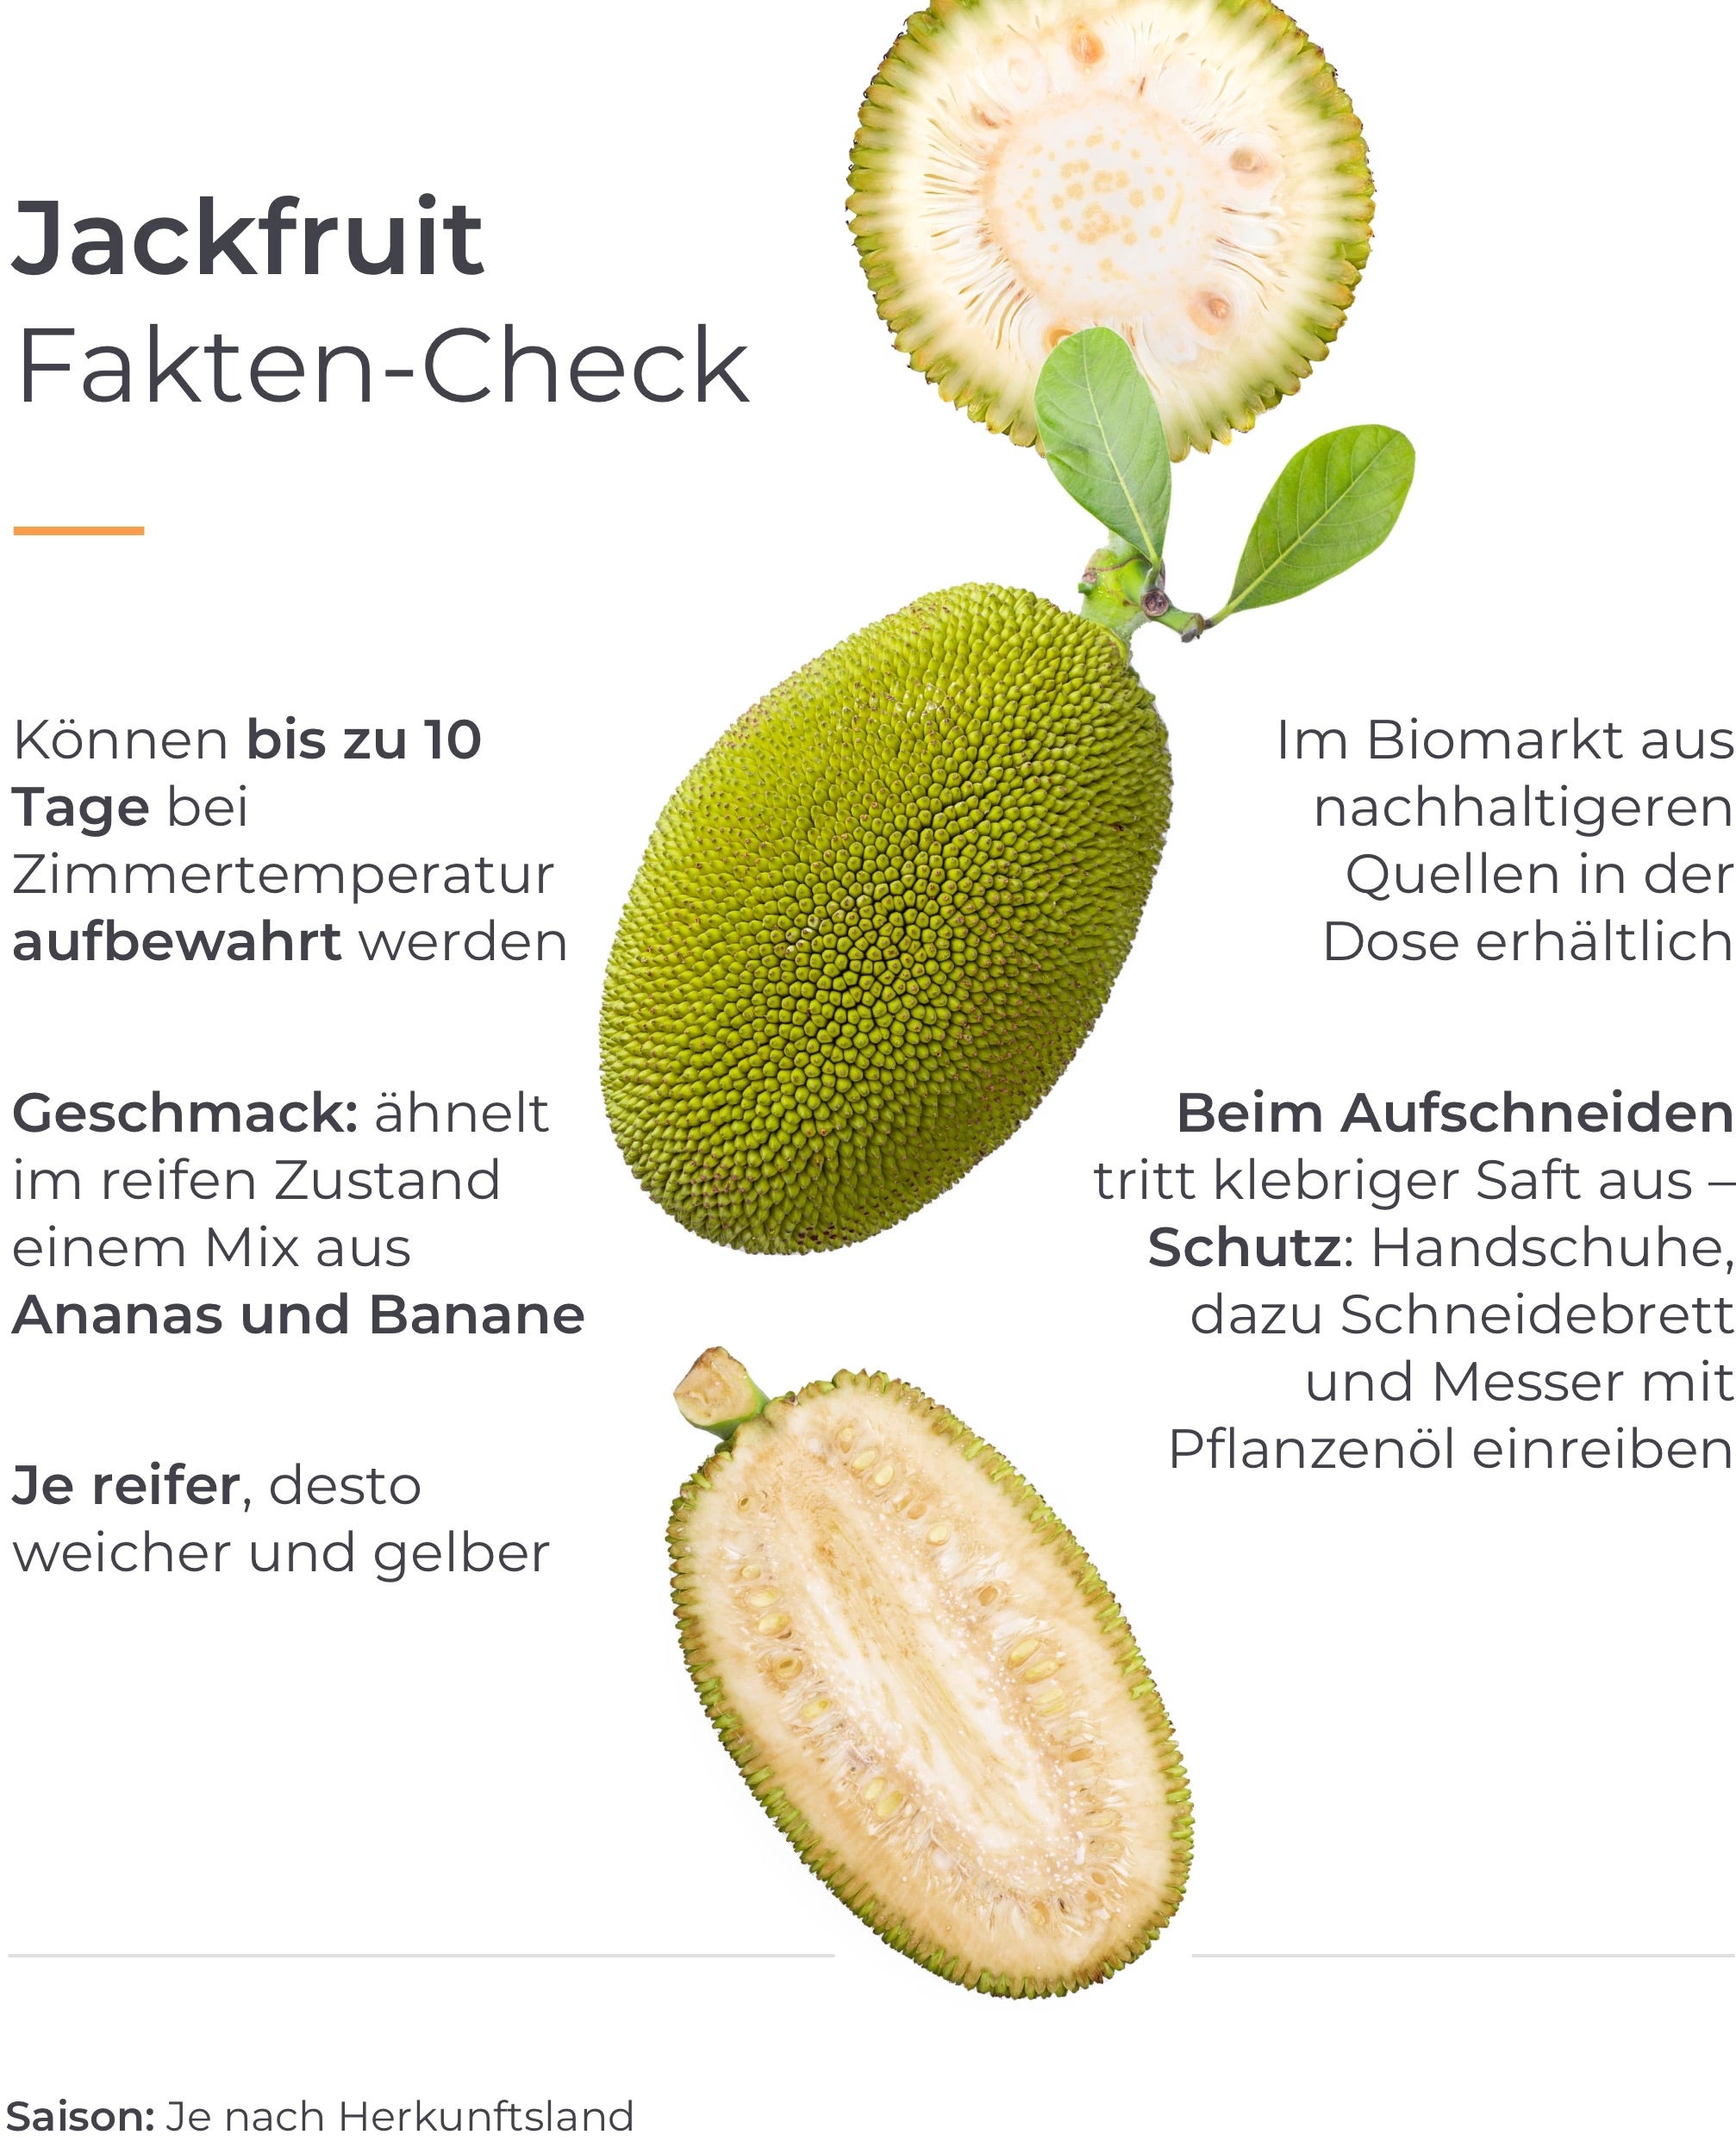 Infografik Fakten-Check Jackfruit.